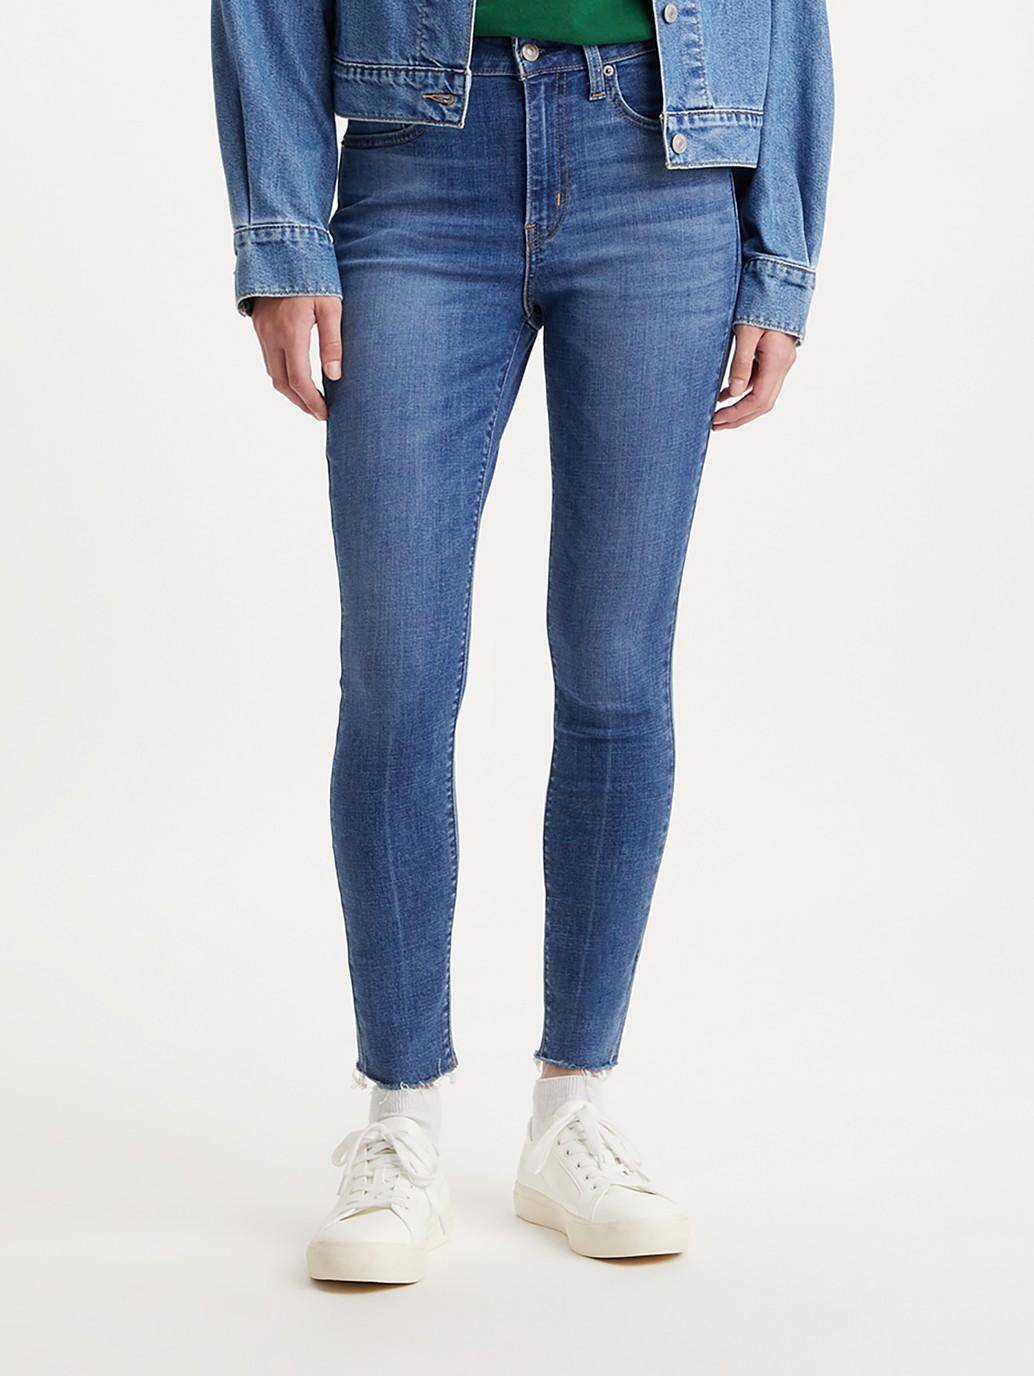 Introducir 45+ imagen levi’s stretch jeans women’s